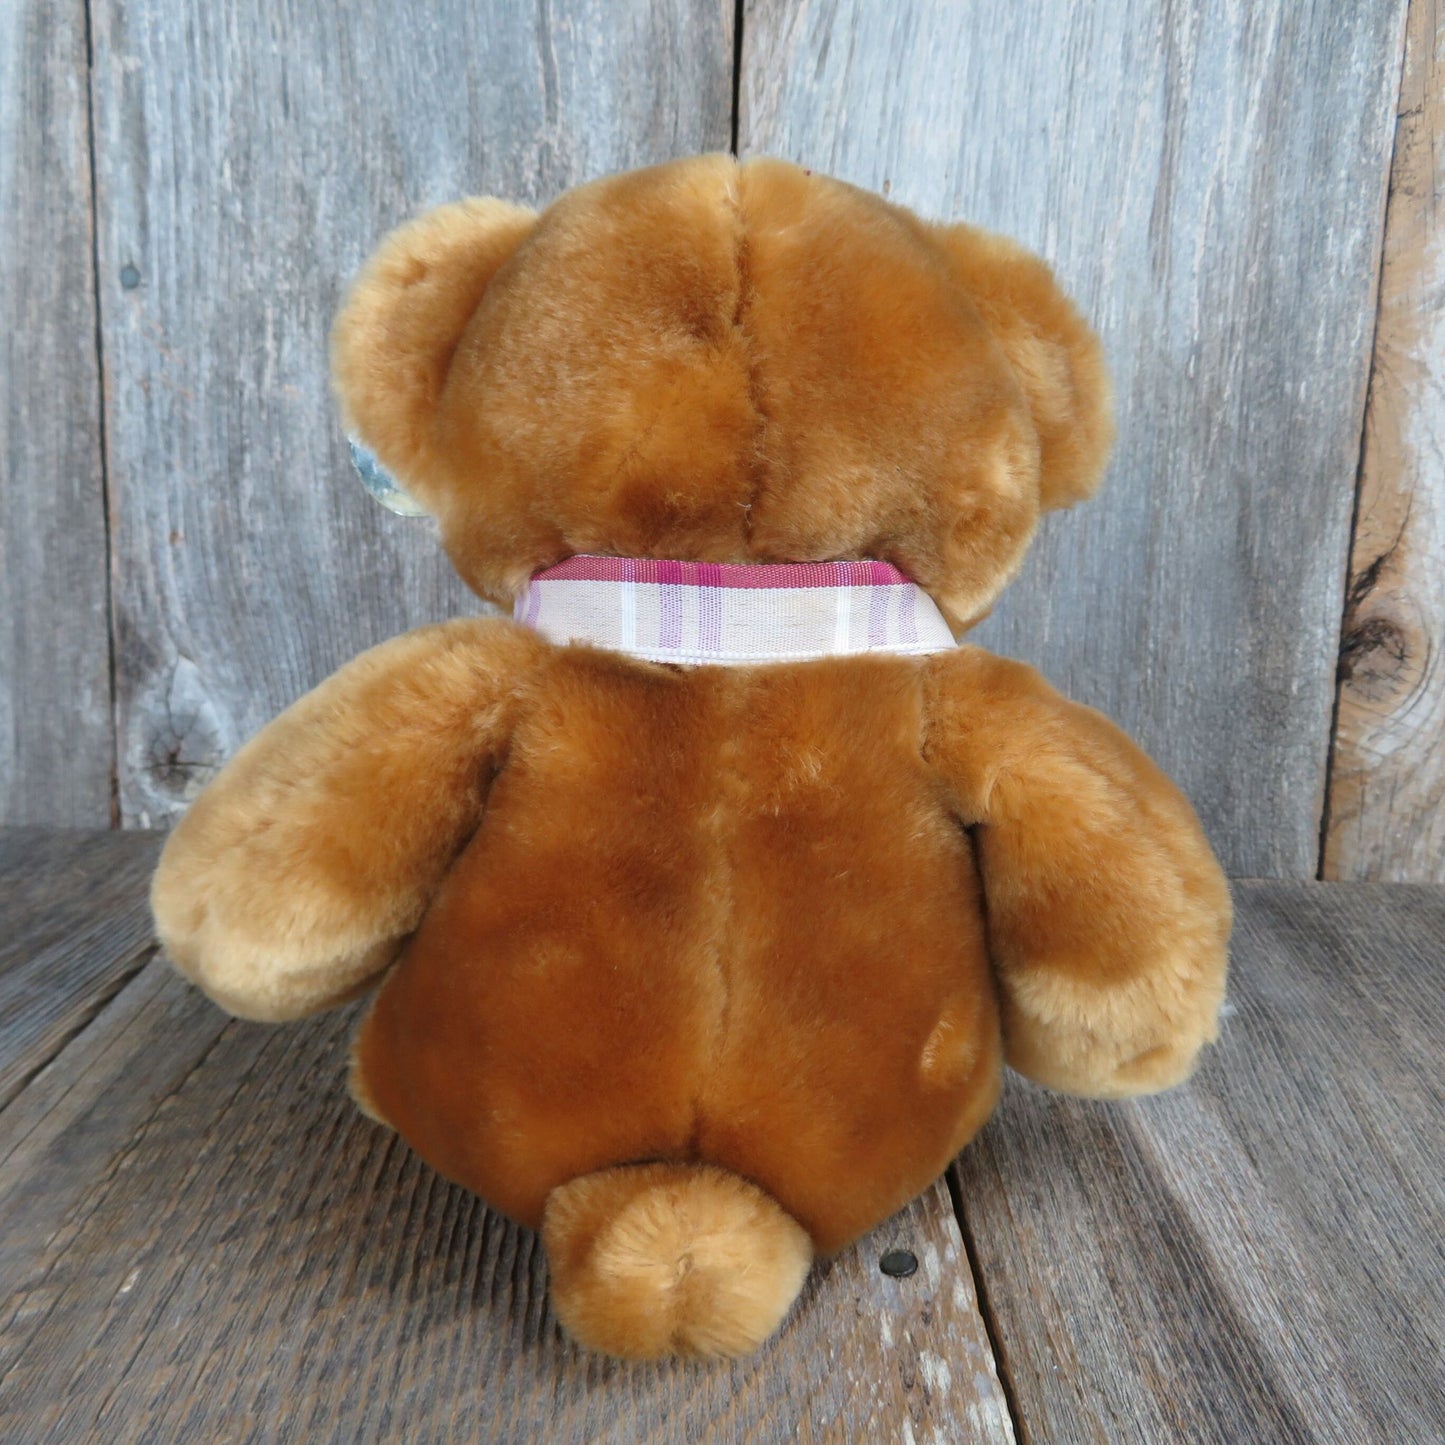 Teddy Bear Plush Shiny Fur Stuffed Animal Flocked Nose Red White Plaid Bow Vintage